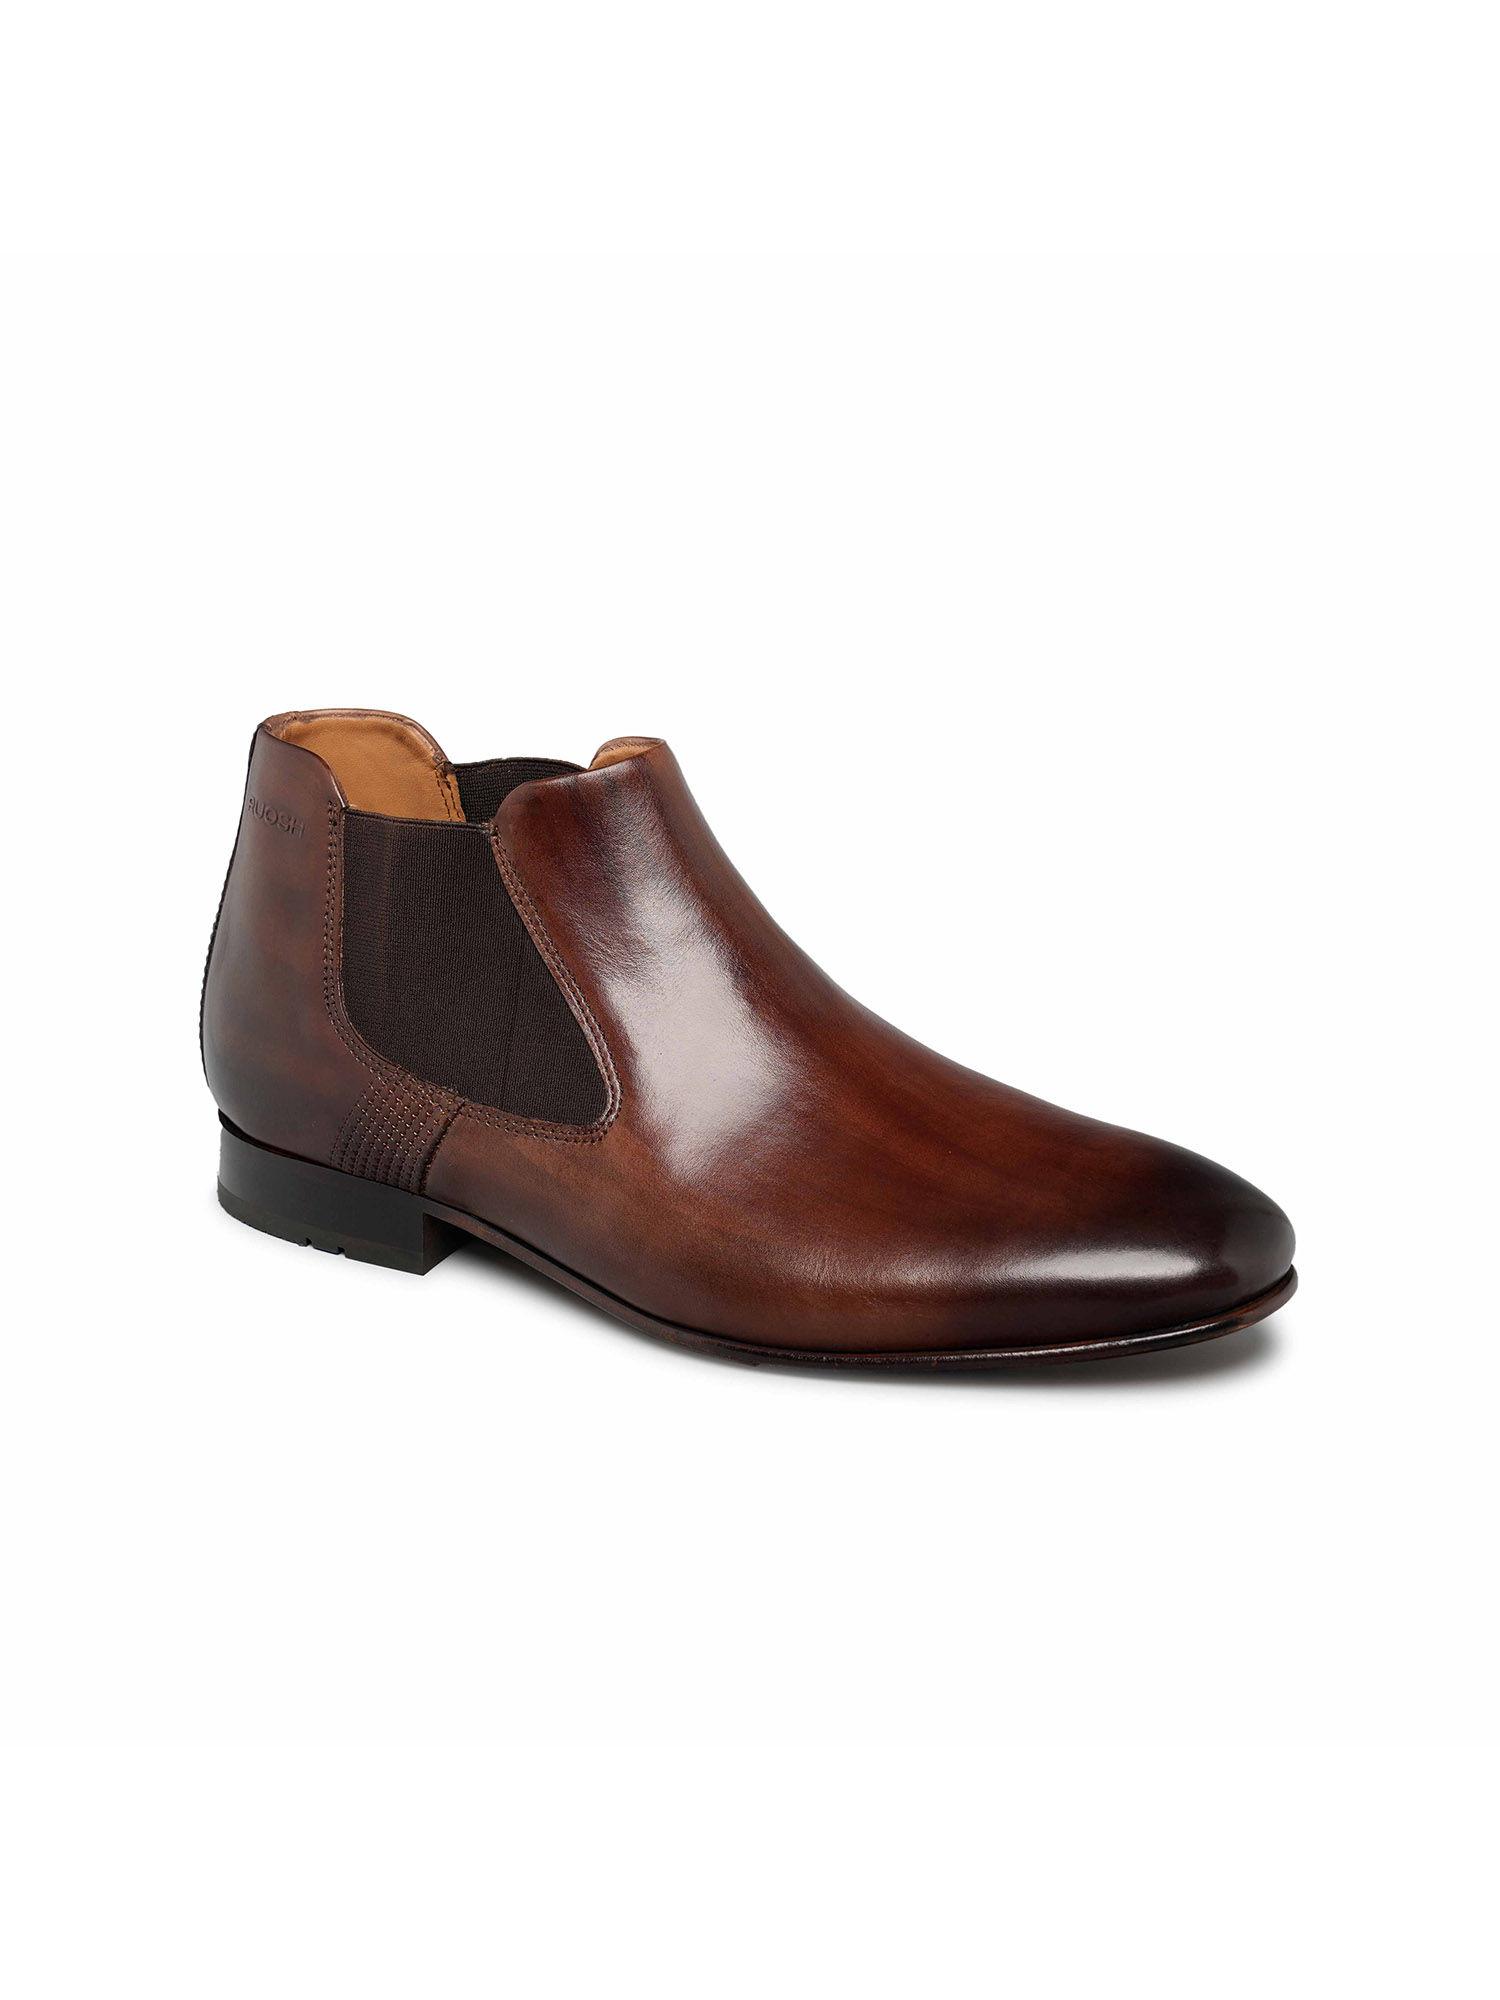 men formal slip on boot shoes brown